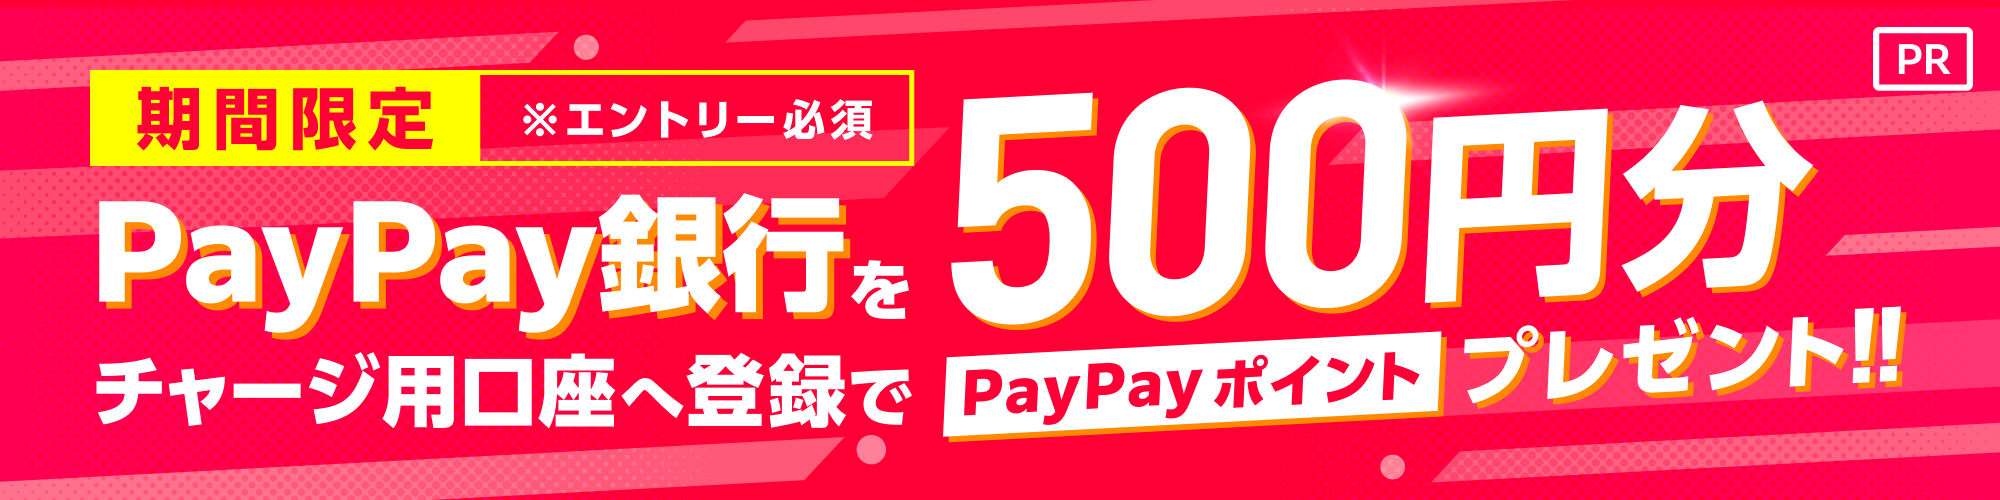 【PR】PayPay銀行新規登録キャンペーン